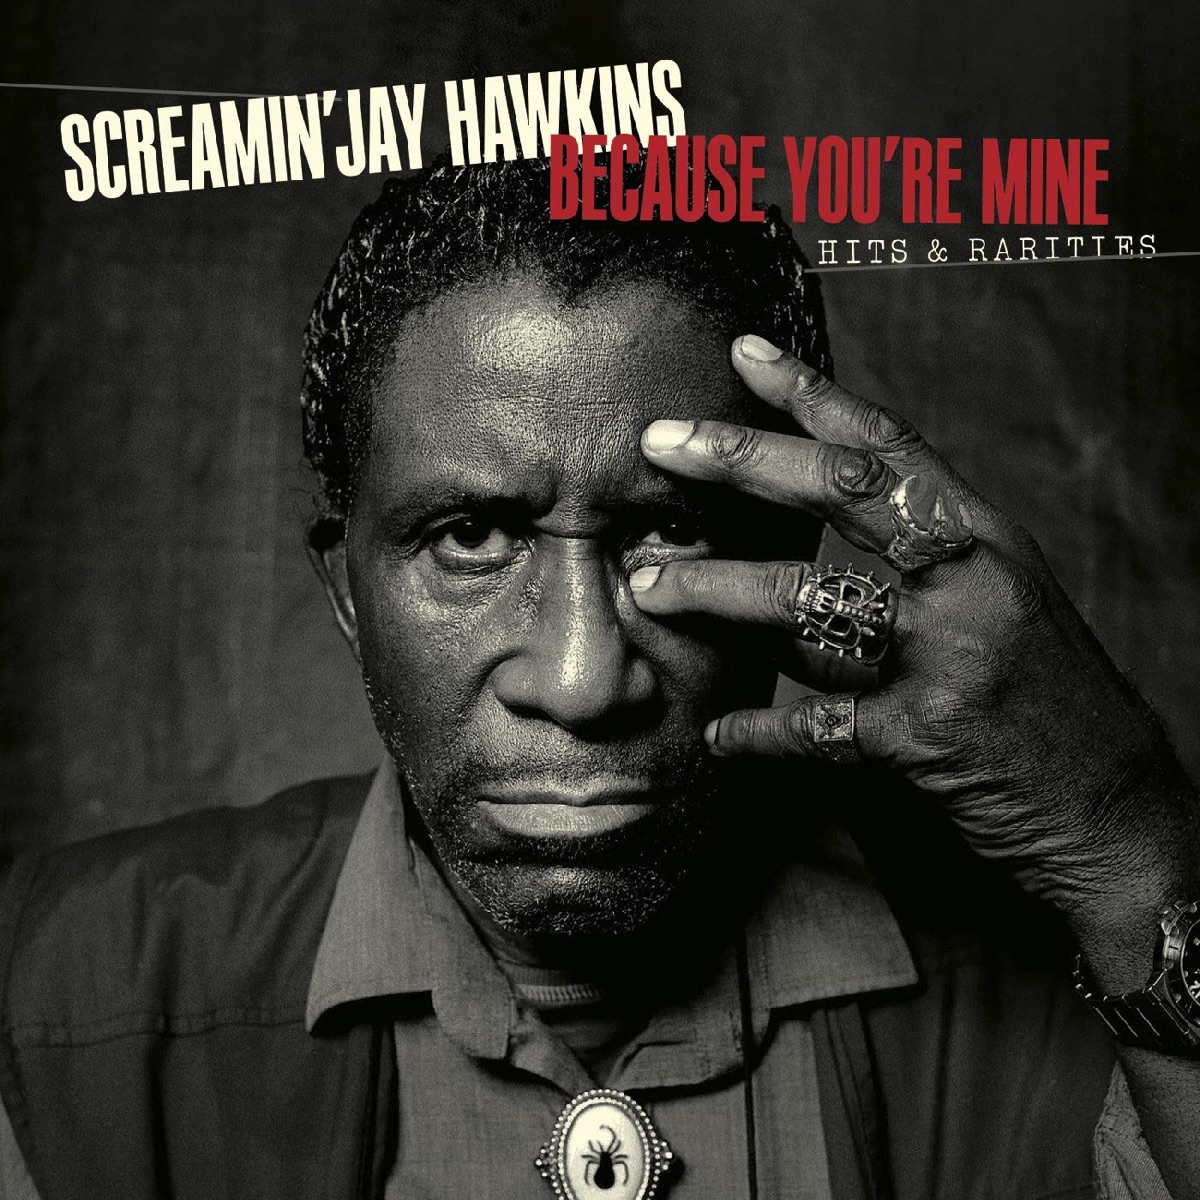 I Put A Spell On You  Screamin' Jay Hawkins